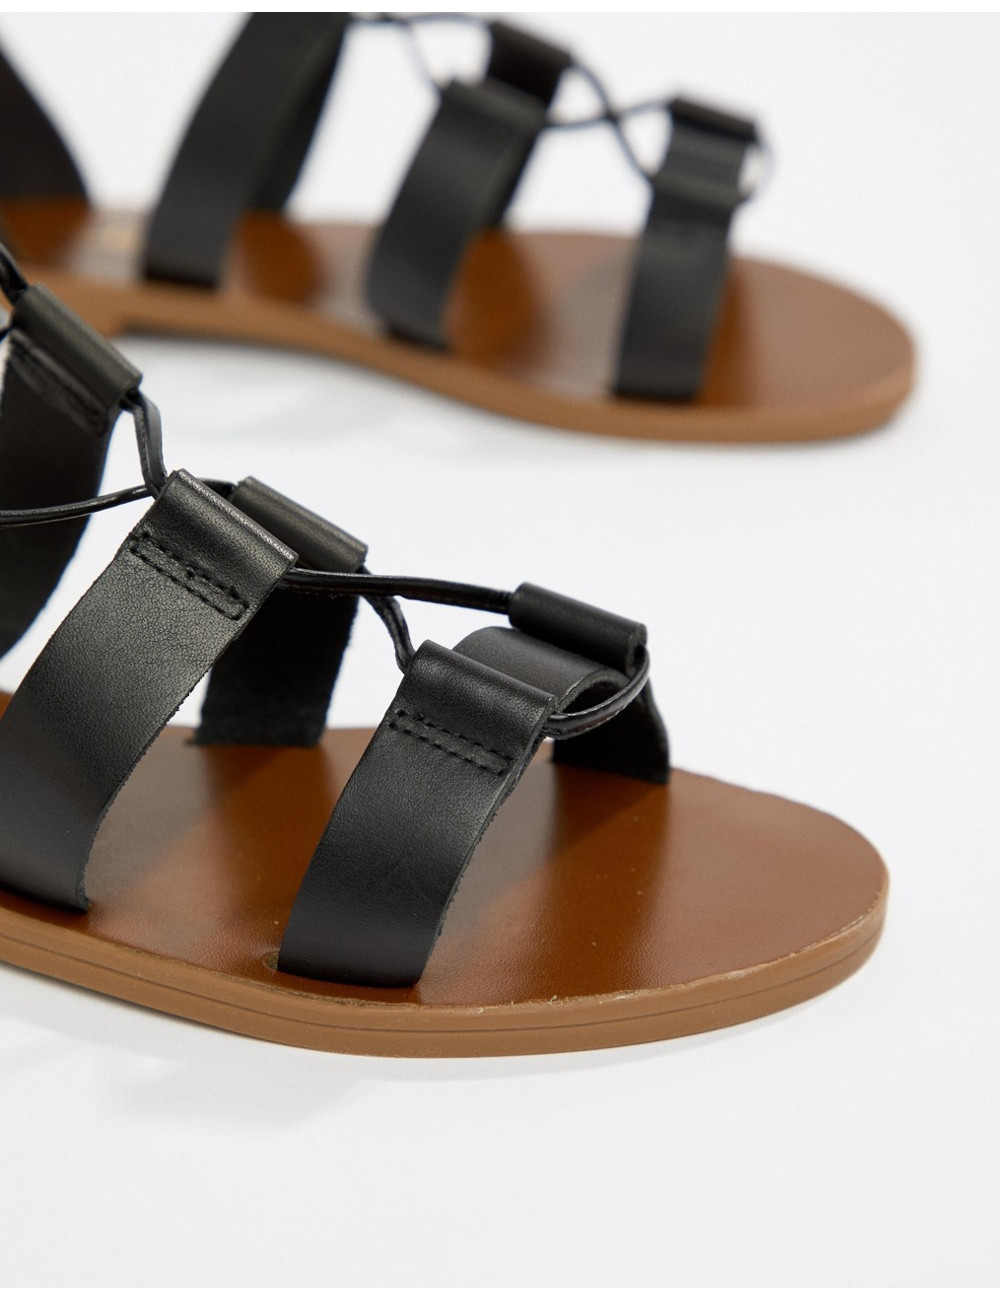 Aldo leather tie leg sandals